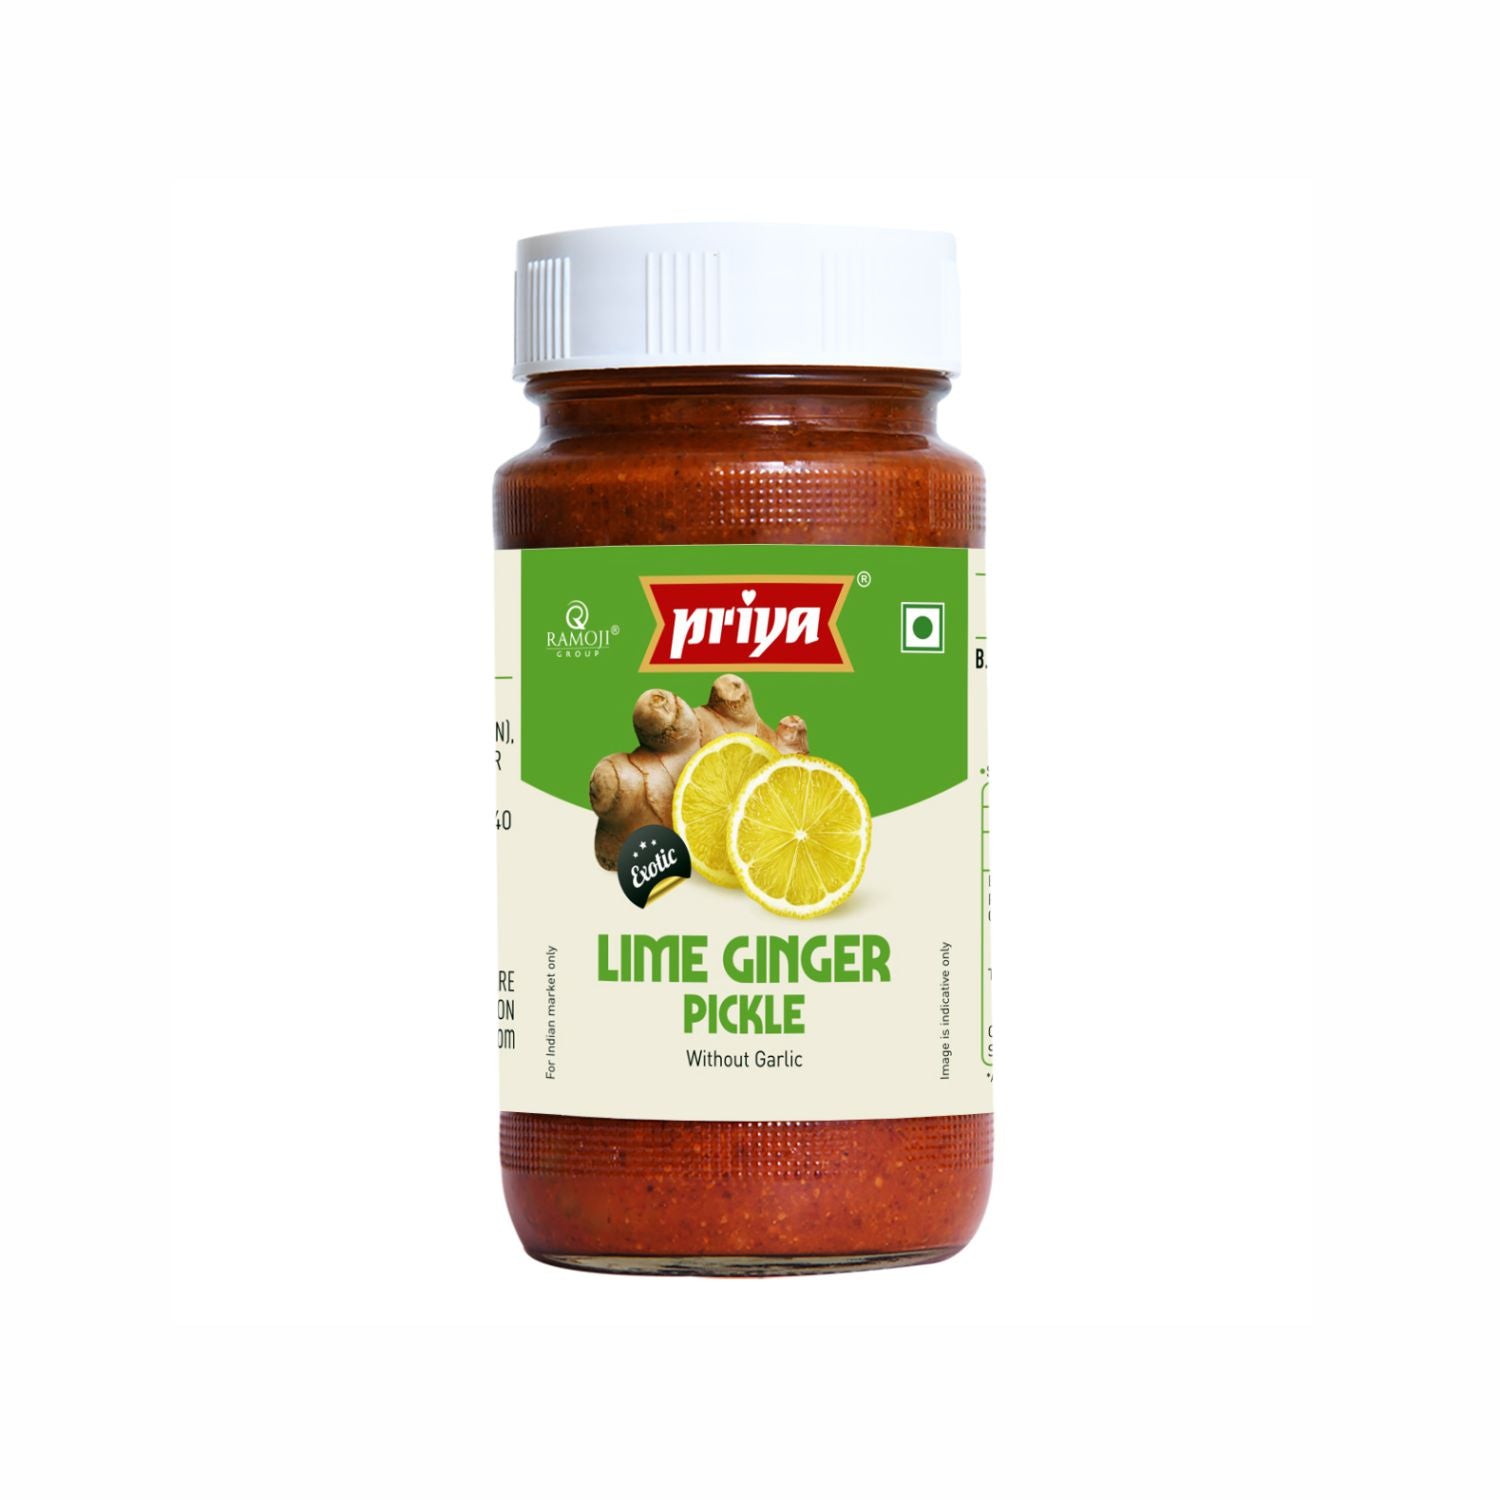 Lime Ginger Pickle